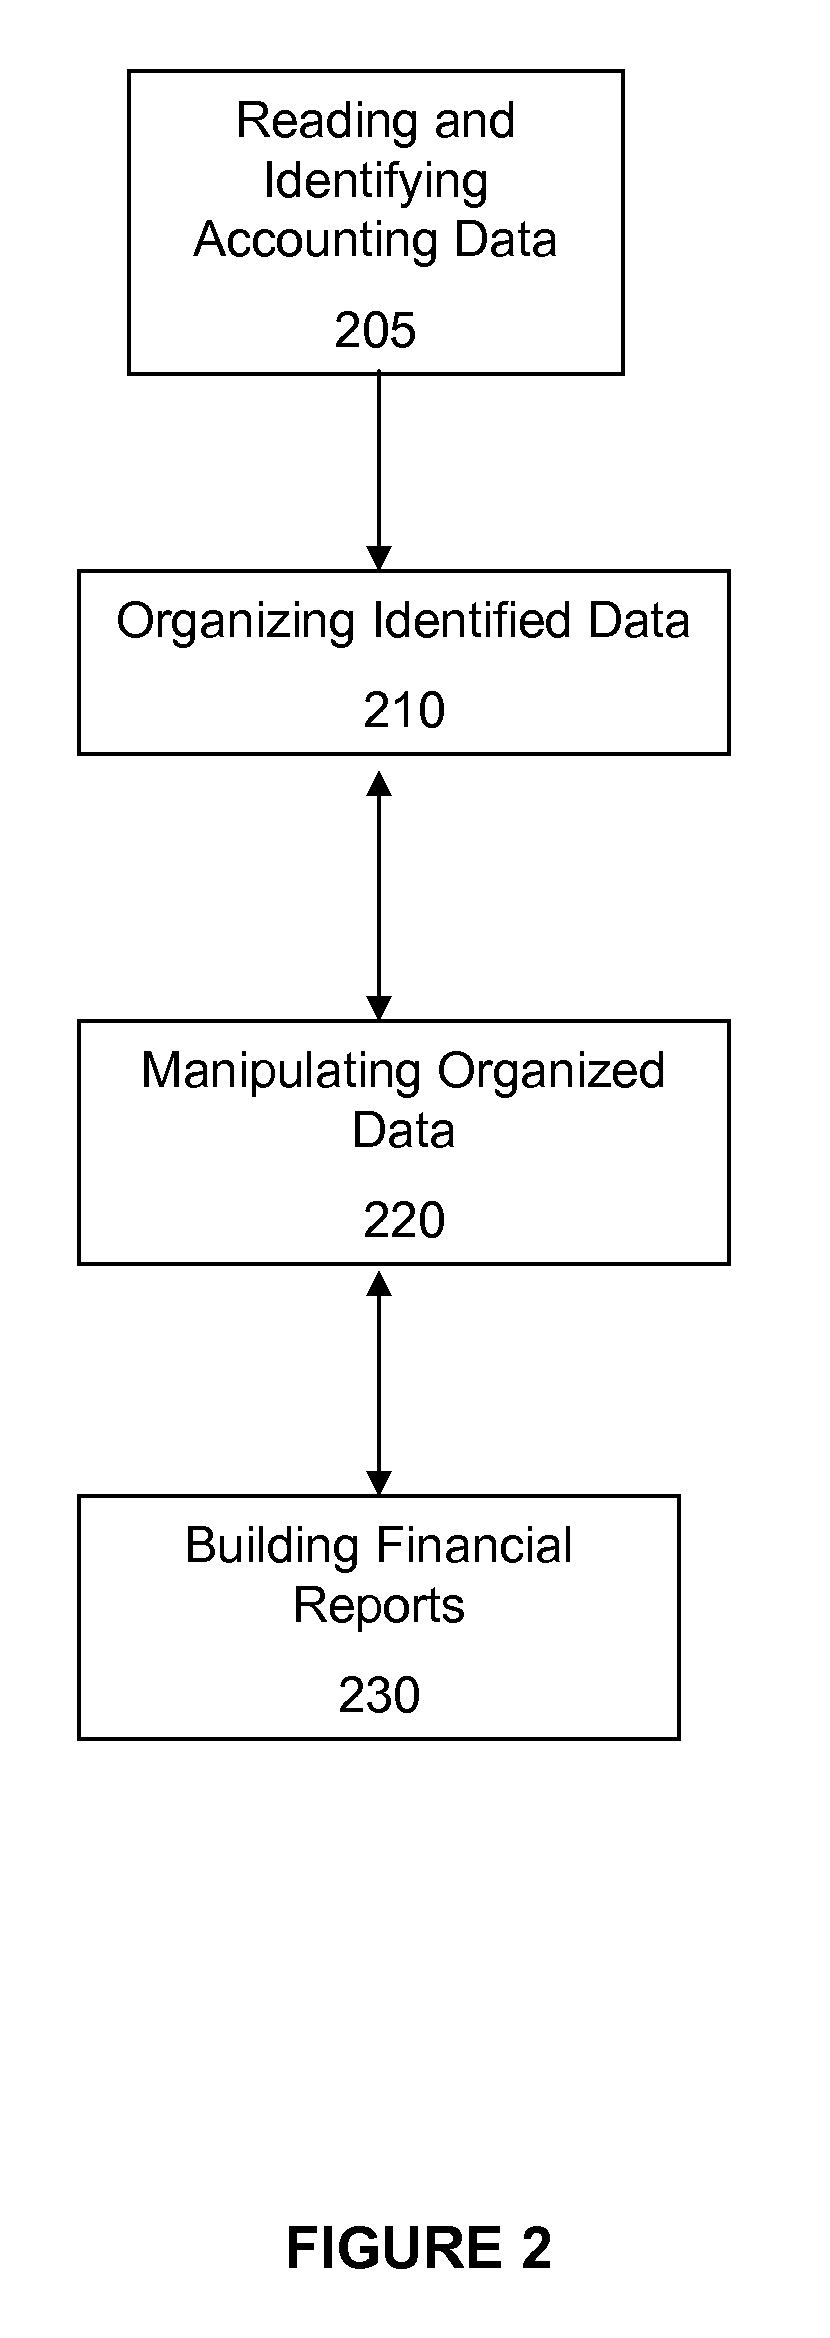 Reading, organizing and manipulating accounting data